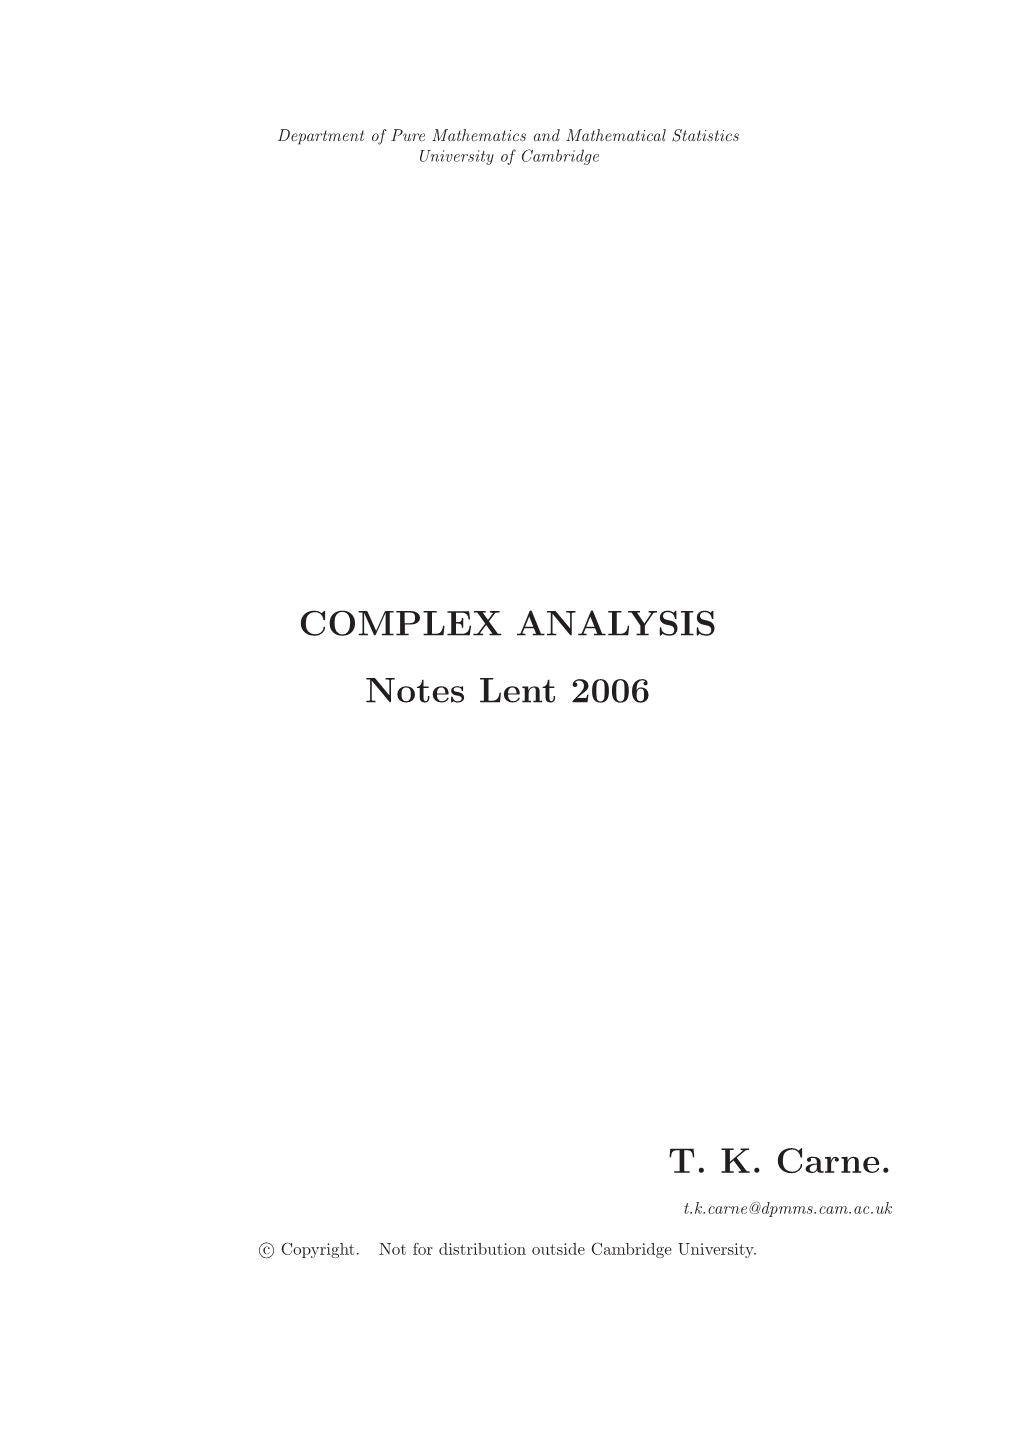 COMPLEX ANALYSIS Notes Lent 2006 T. K. Carne